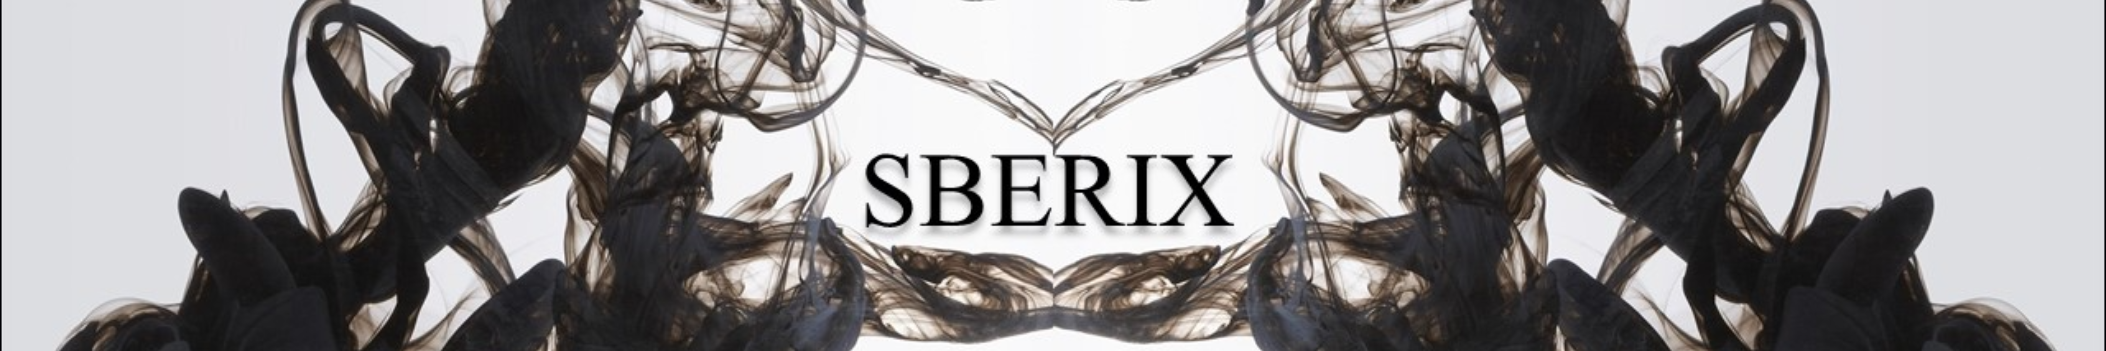 "Sberix"